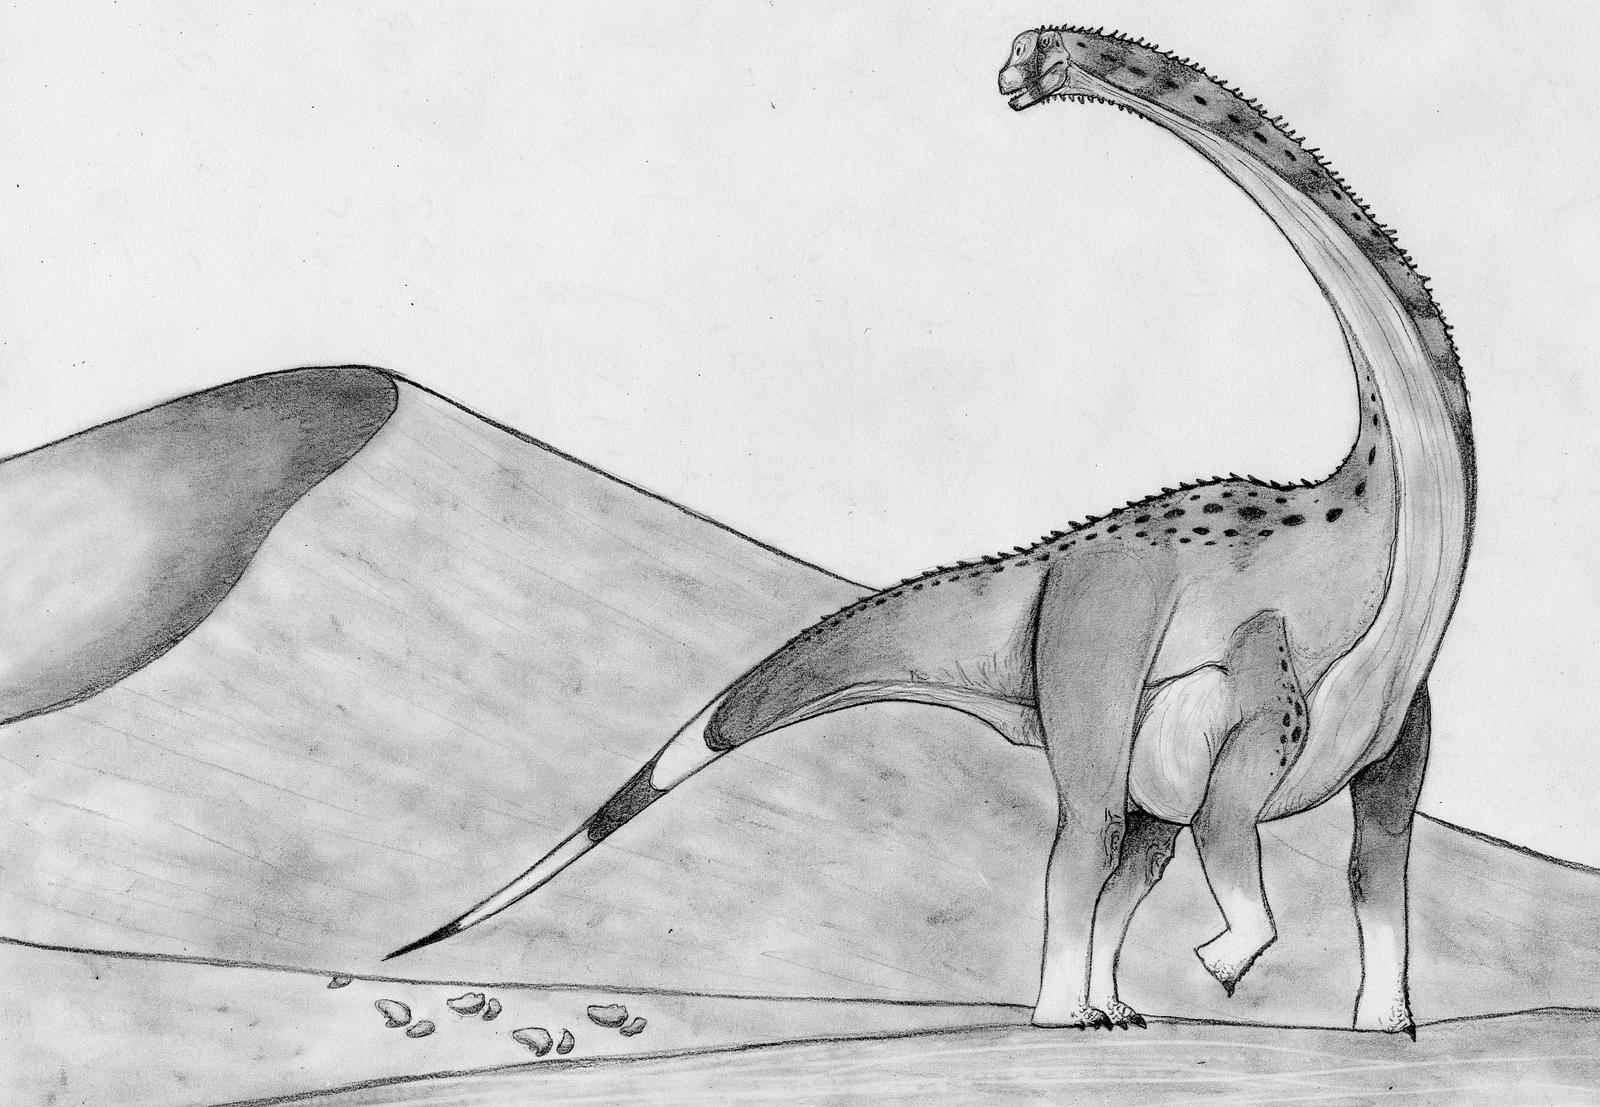 The Broome Titanosaur